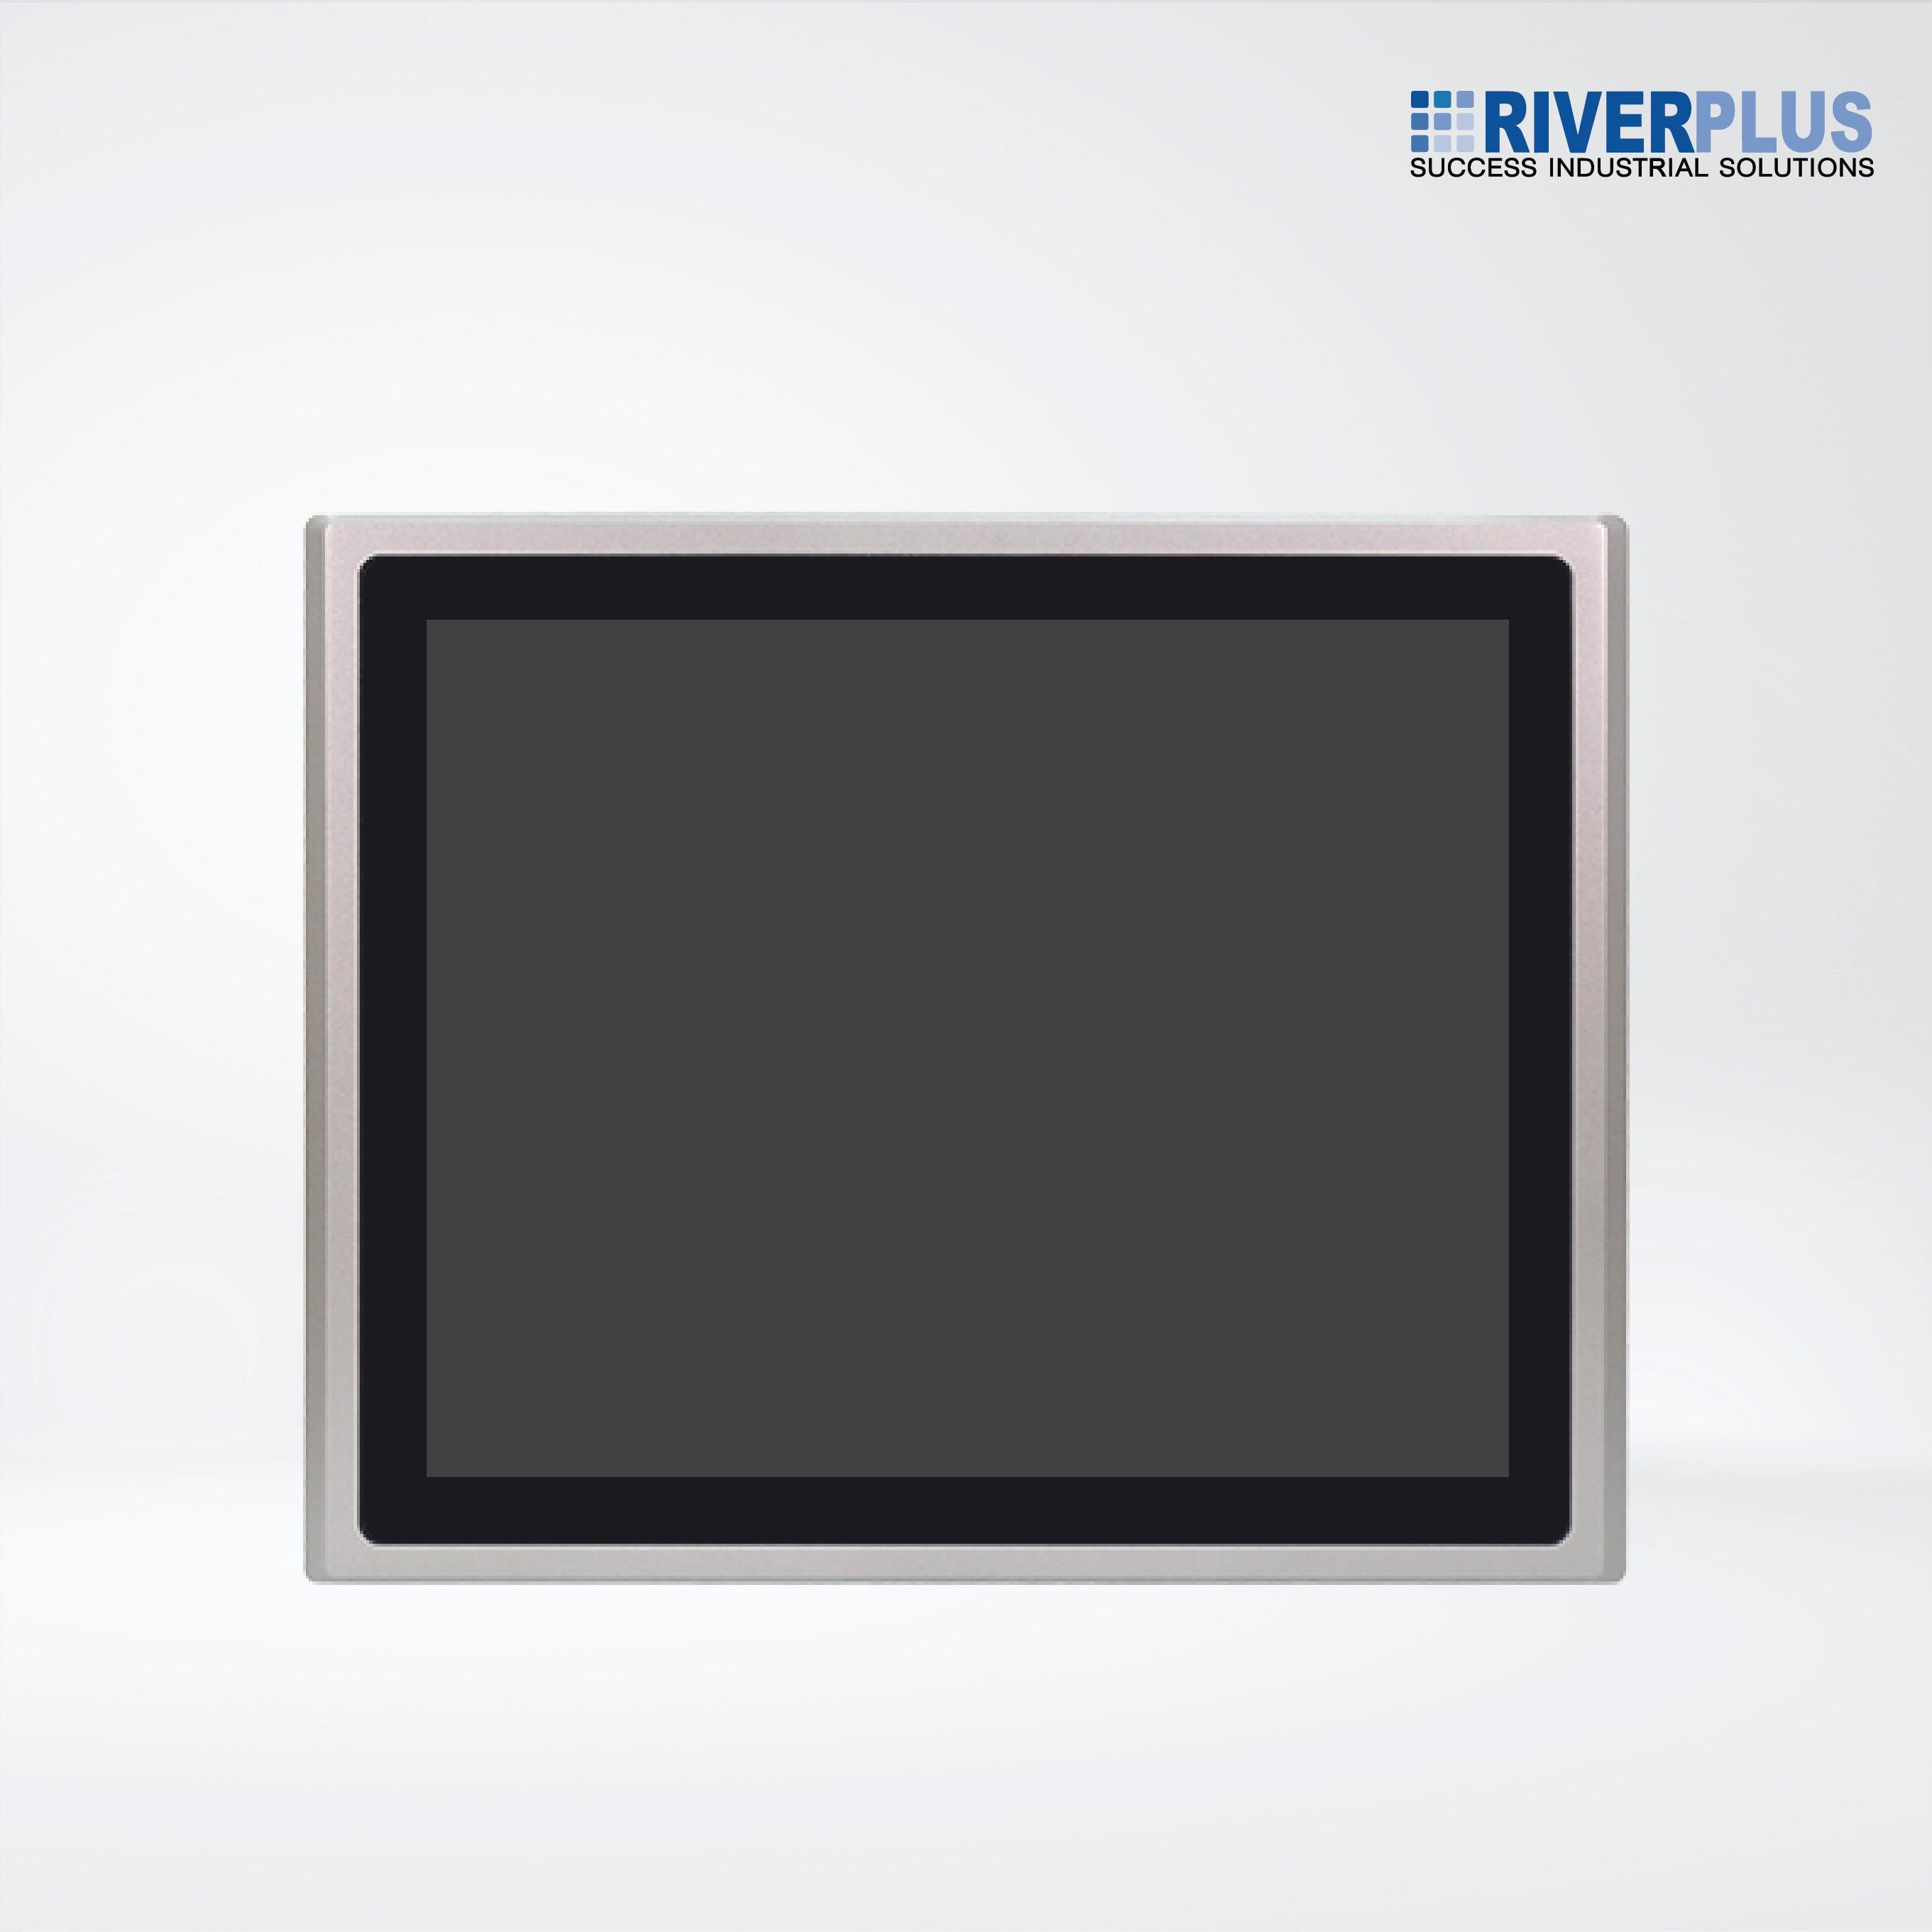 ARCHMI-819P 19" Intel Celeron N2930/ Atom E3845, Fanless Industrial Compact Size Panel PC - Riverplus